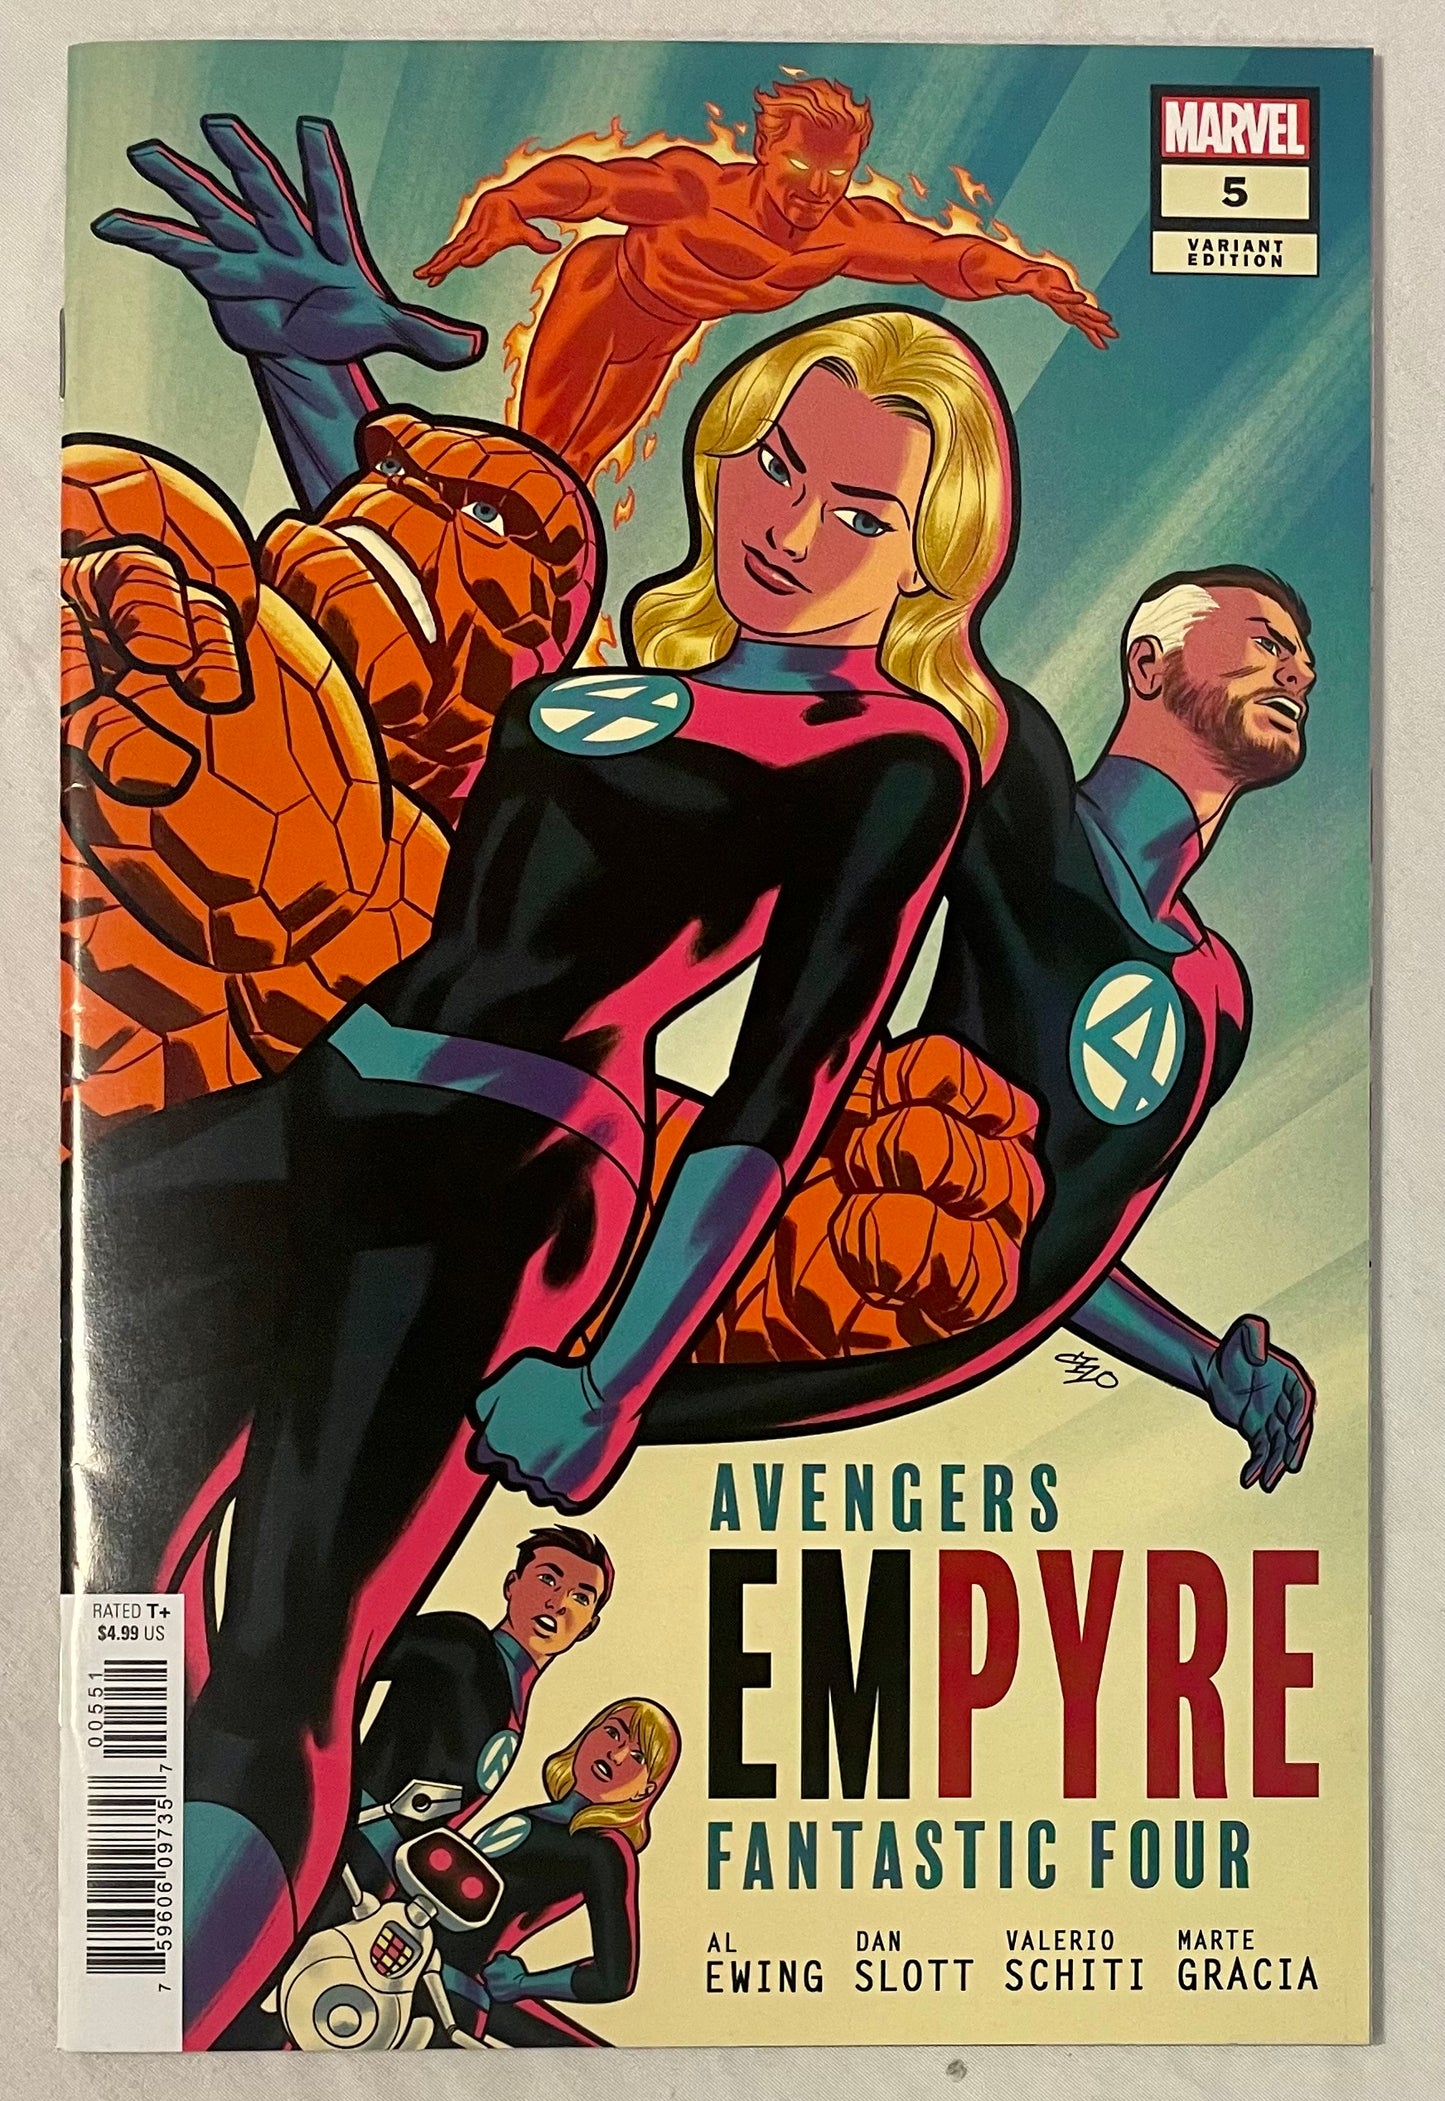 Marvel Comics Avengers Empyre Fantastic Four #5